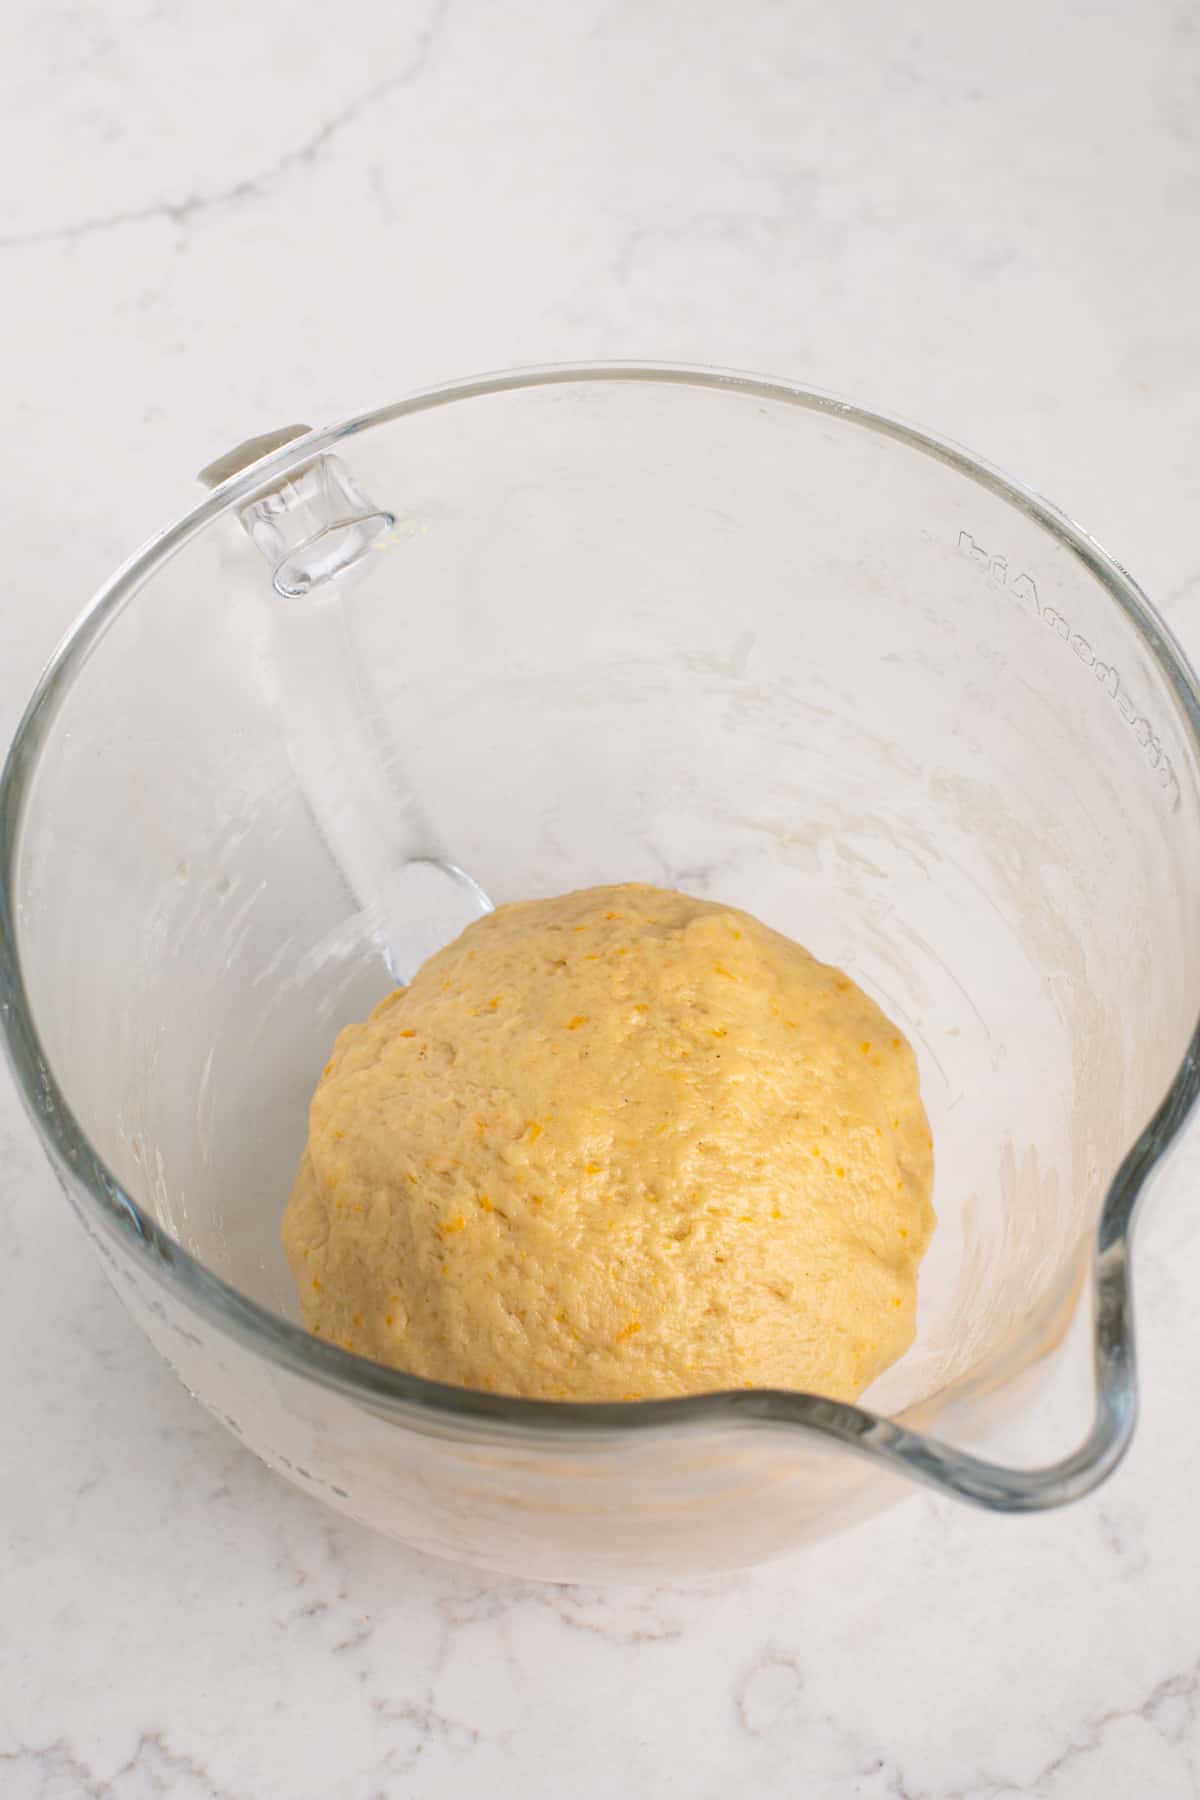 Kneaded orange roll dough, ready to rise.